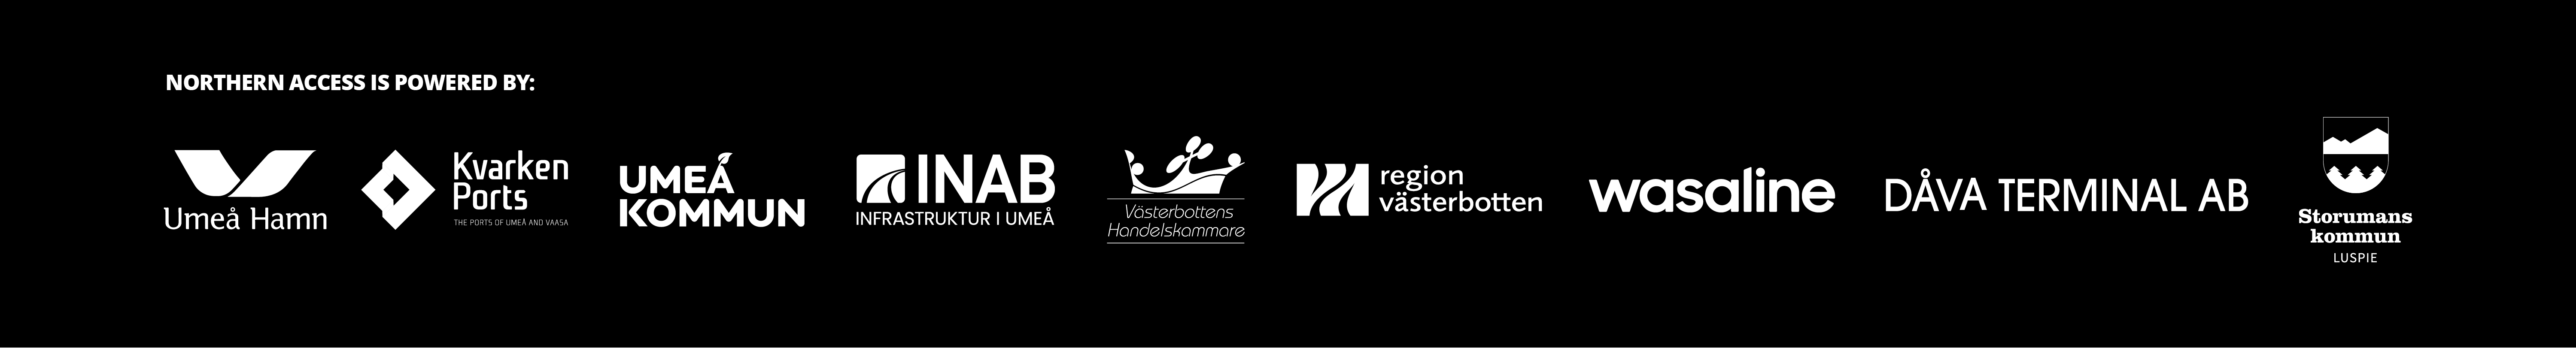 Northern Access partner logos